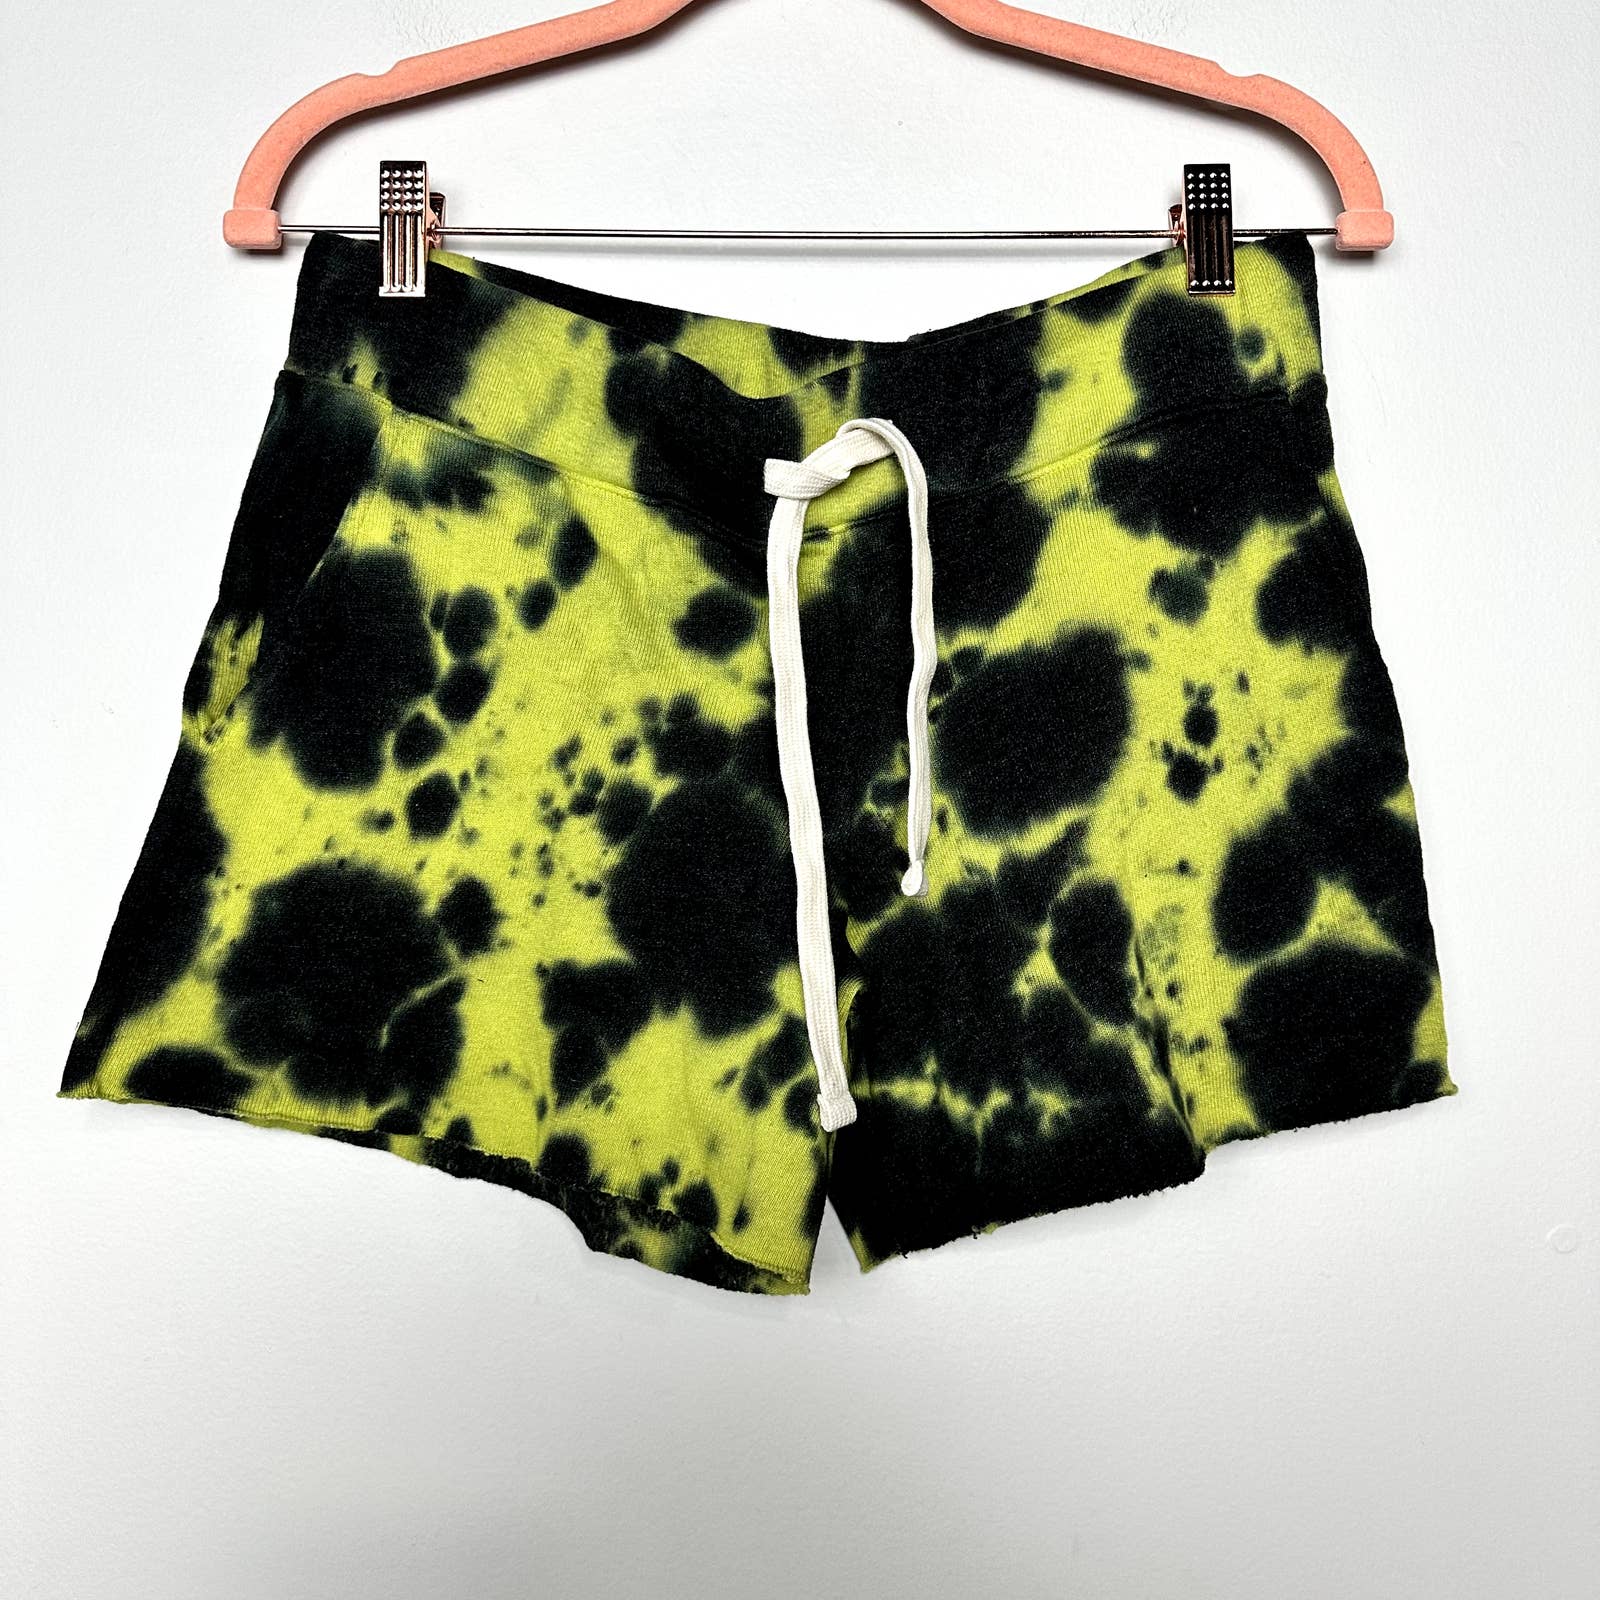 Monrow NWT Tie Dye Drawstring Raw Edge Vintage Sweat Shorts Neon Green Sz Small